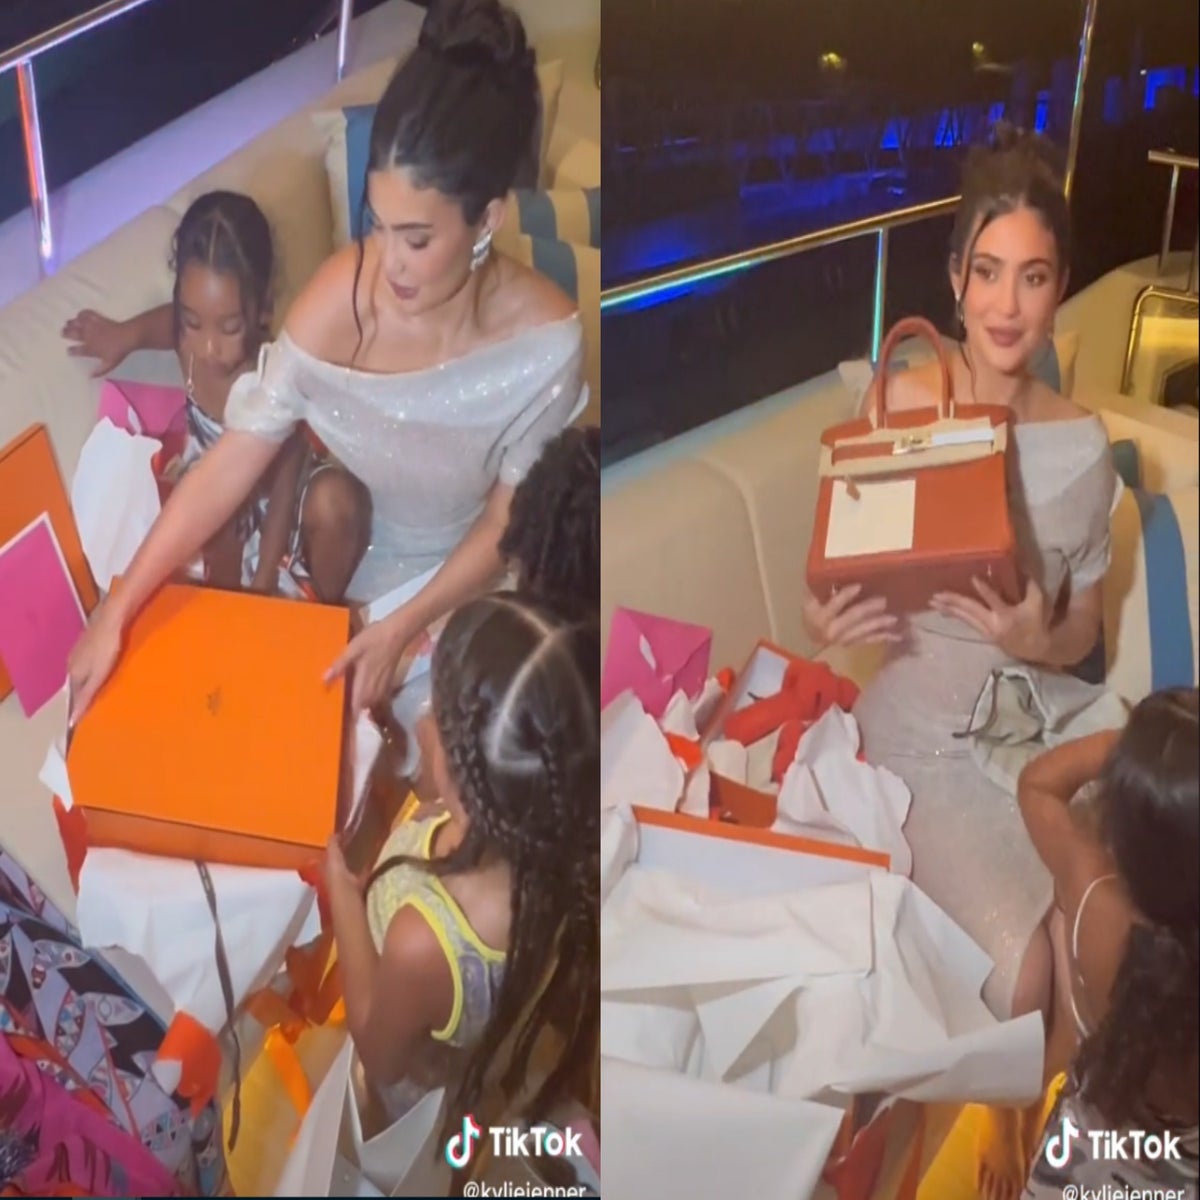 Kylie Jenner receives rare Hermès Birkin bag for her birthday